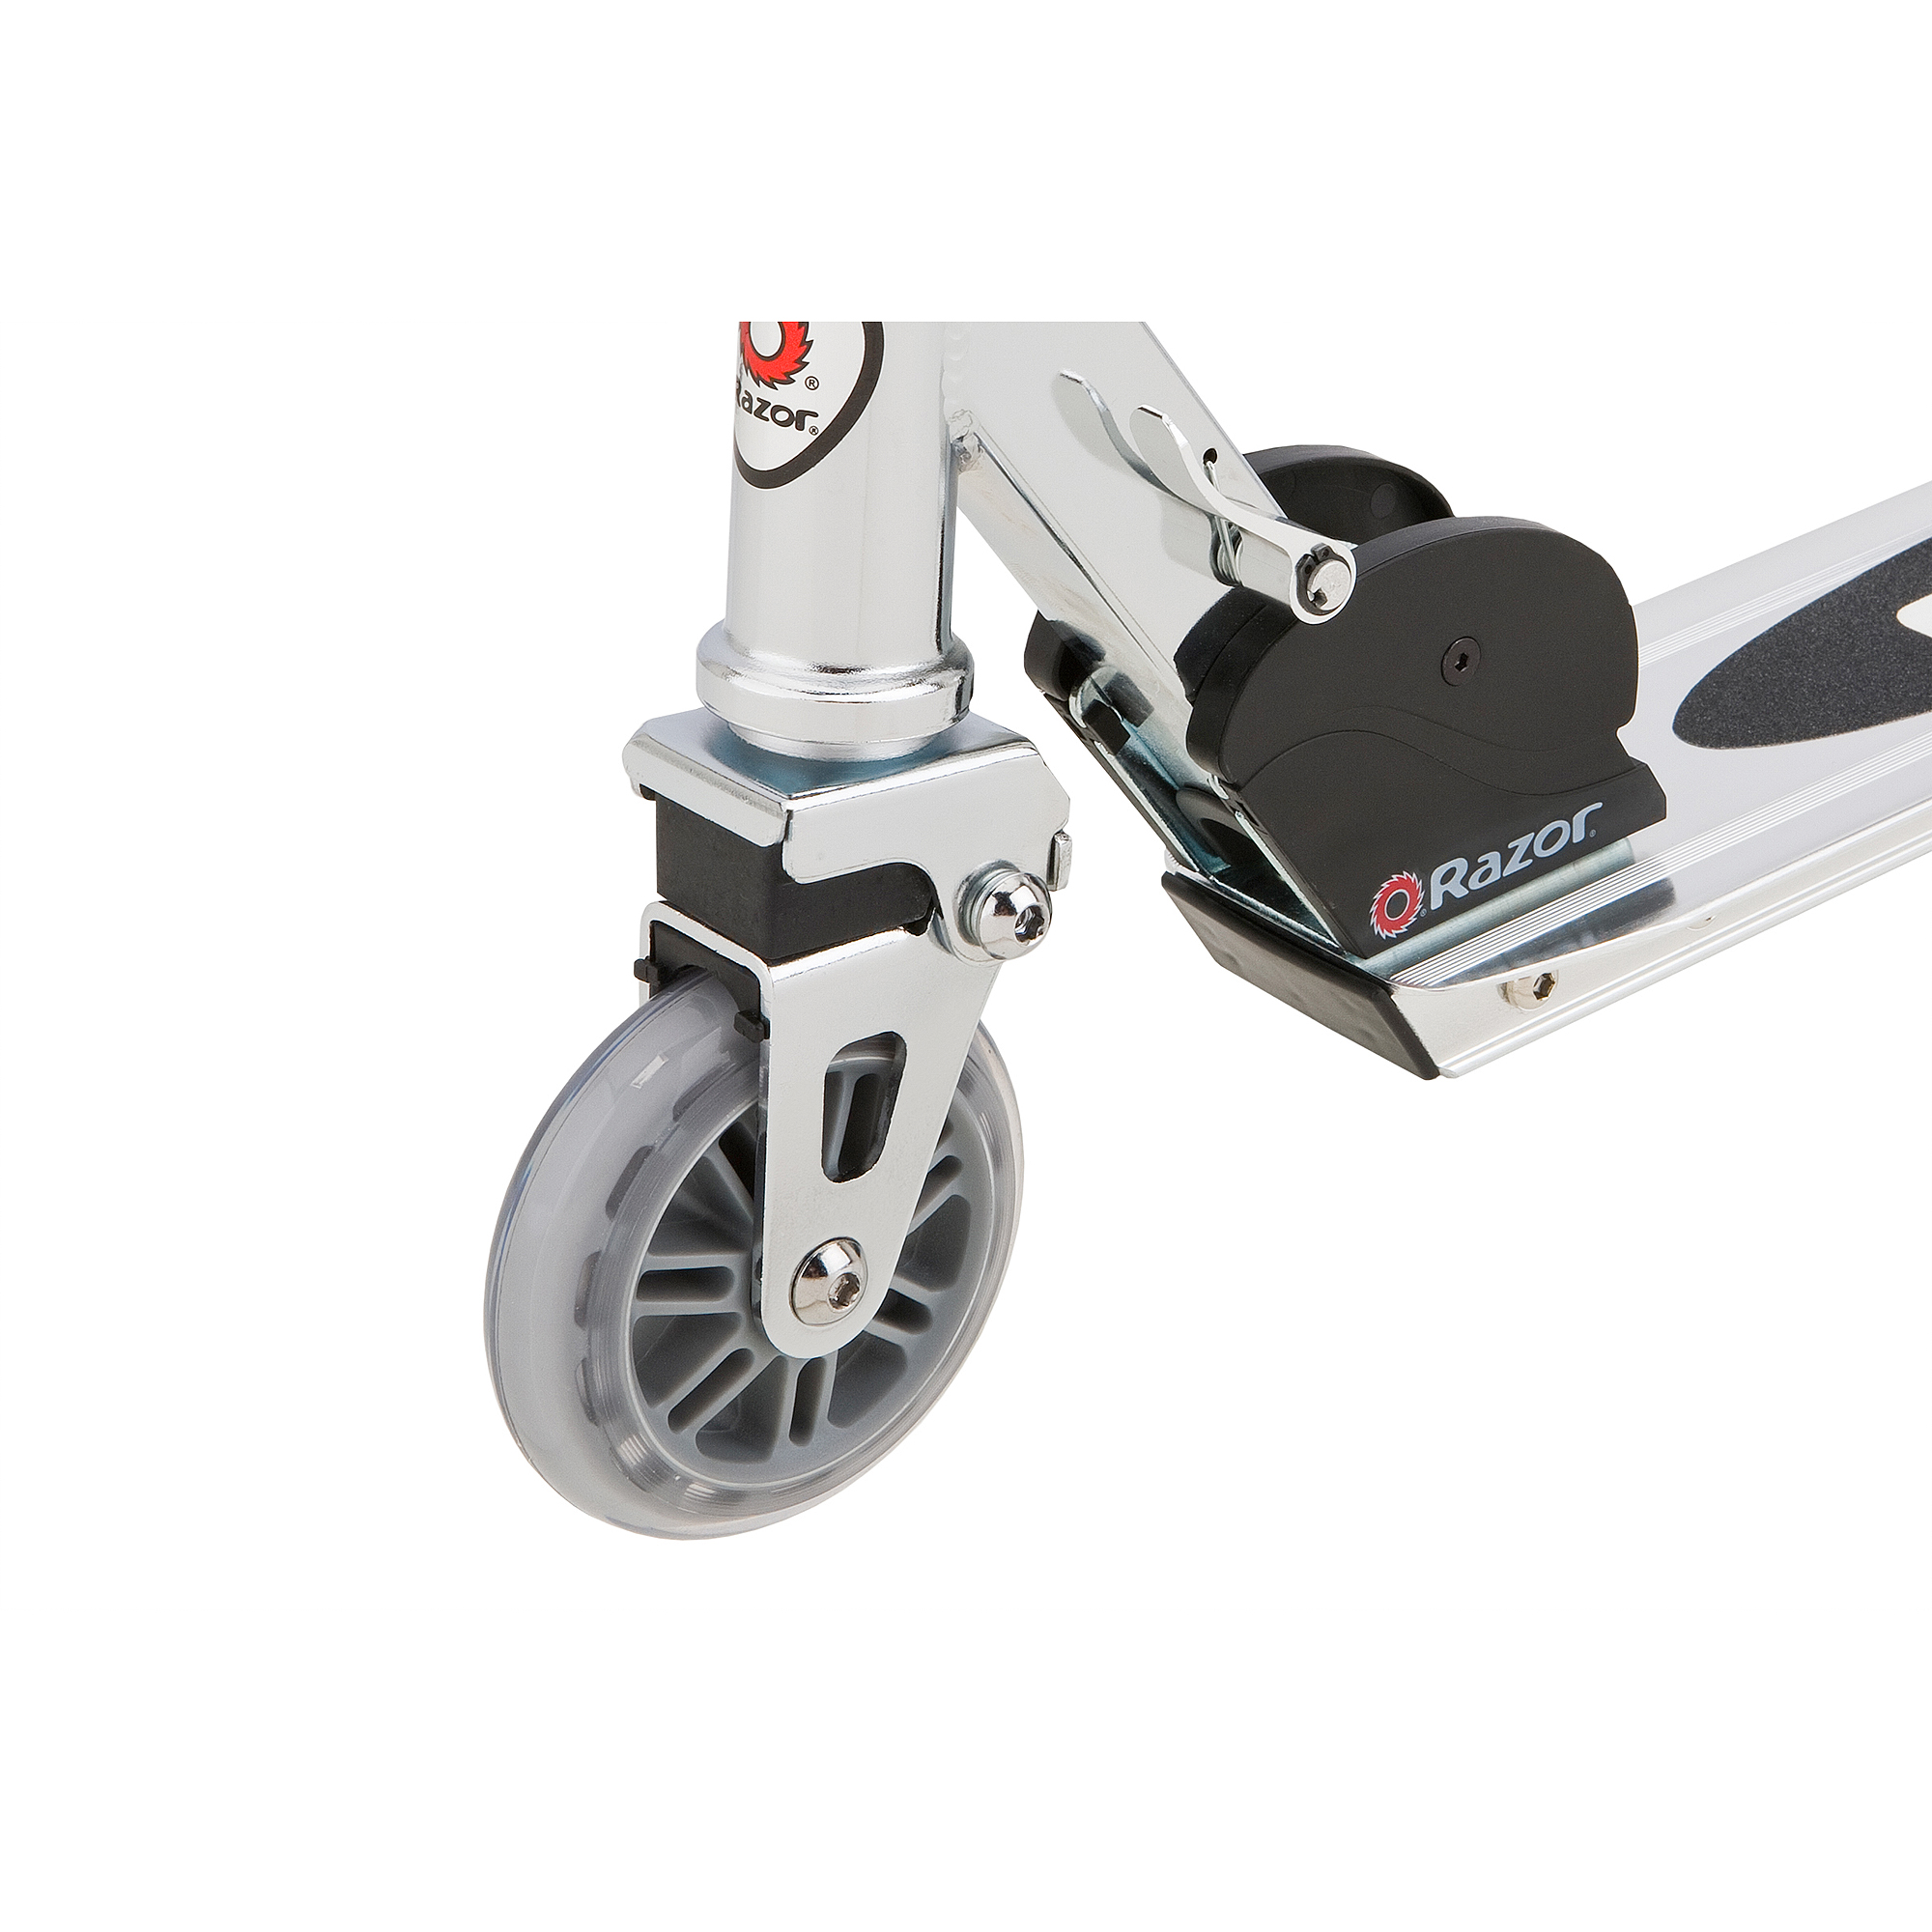 Razor A2 Kick Scooter for Kids - Wheelie Bar, Front Suspension, Lightweight, Foldable, Aluminum Frame, and Adjustable Handlebars - image 5 of 9